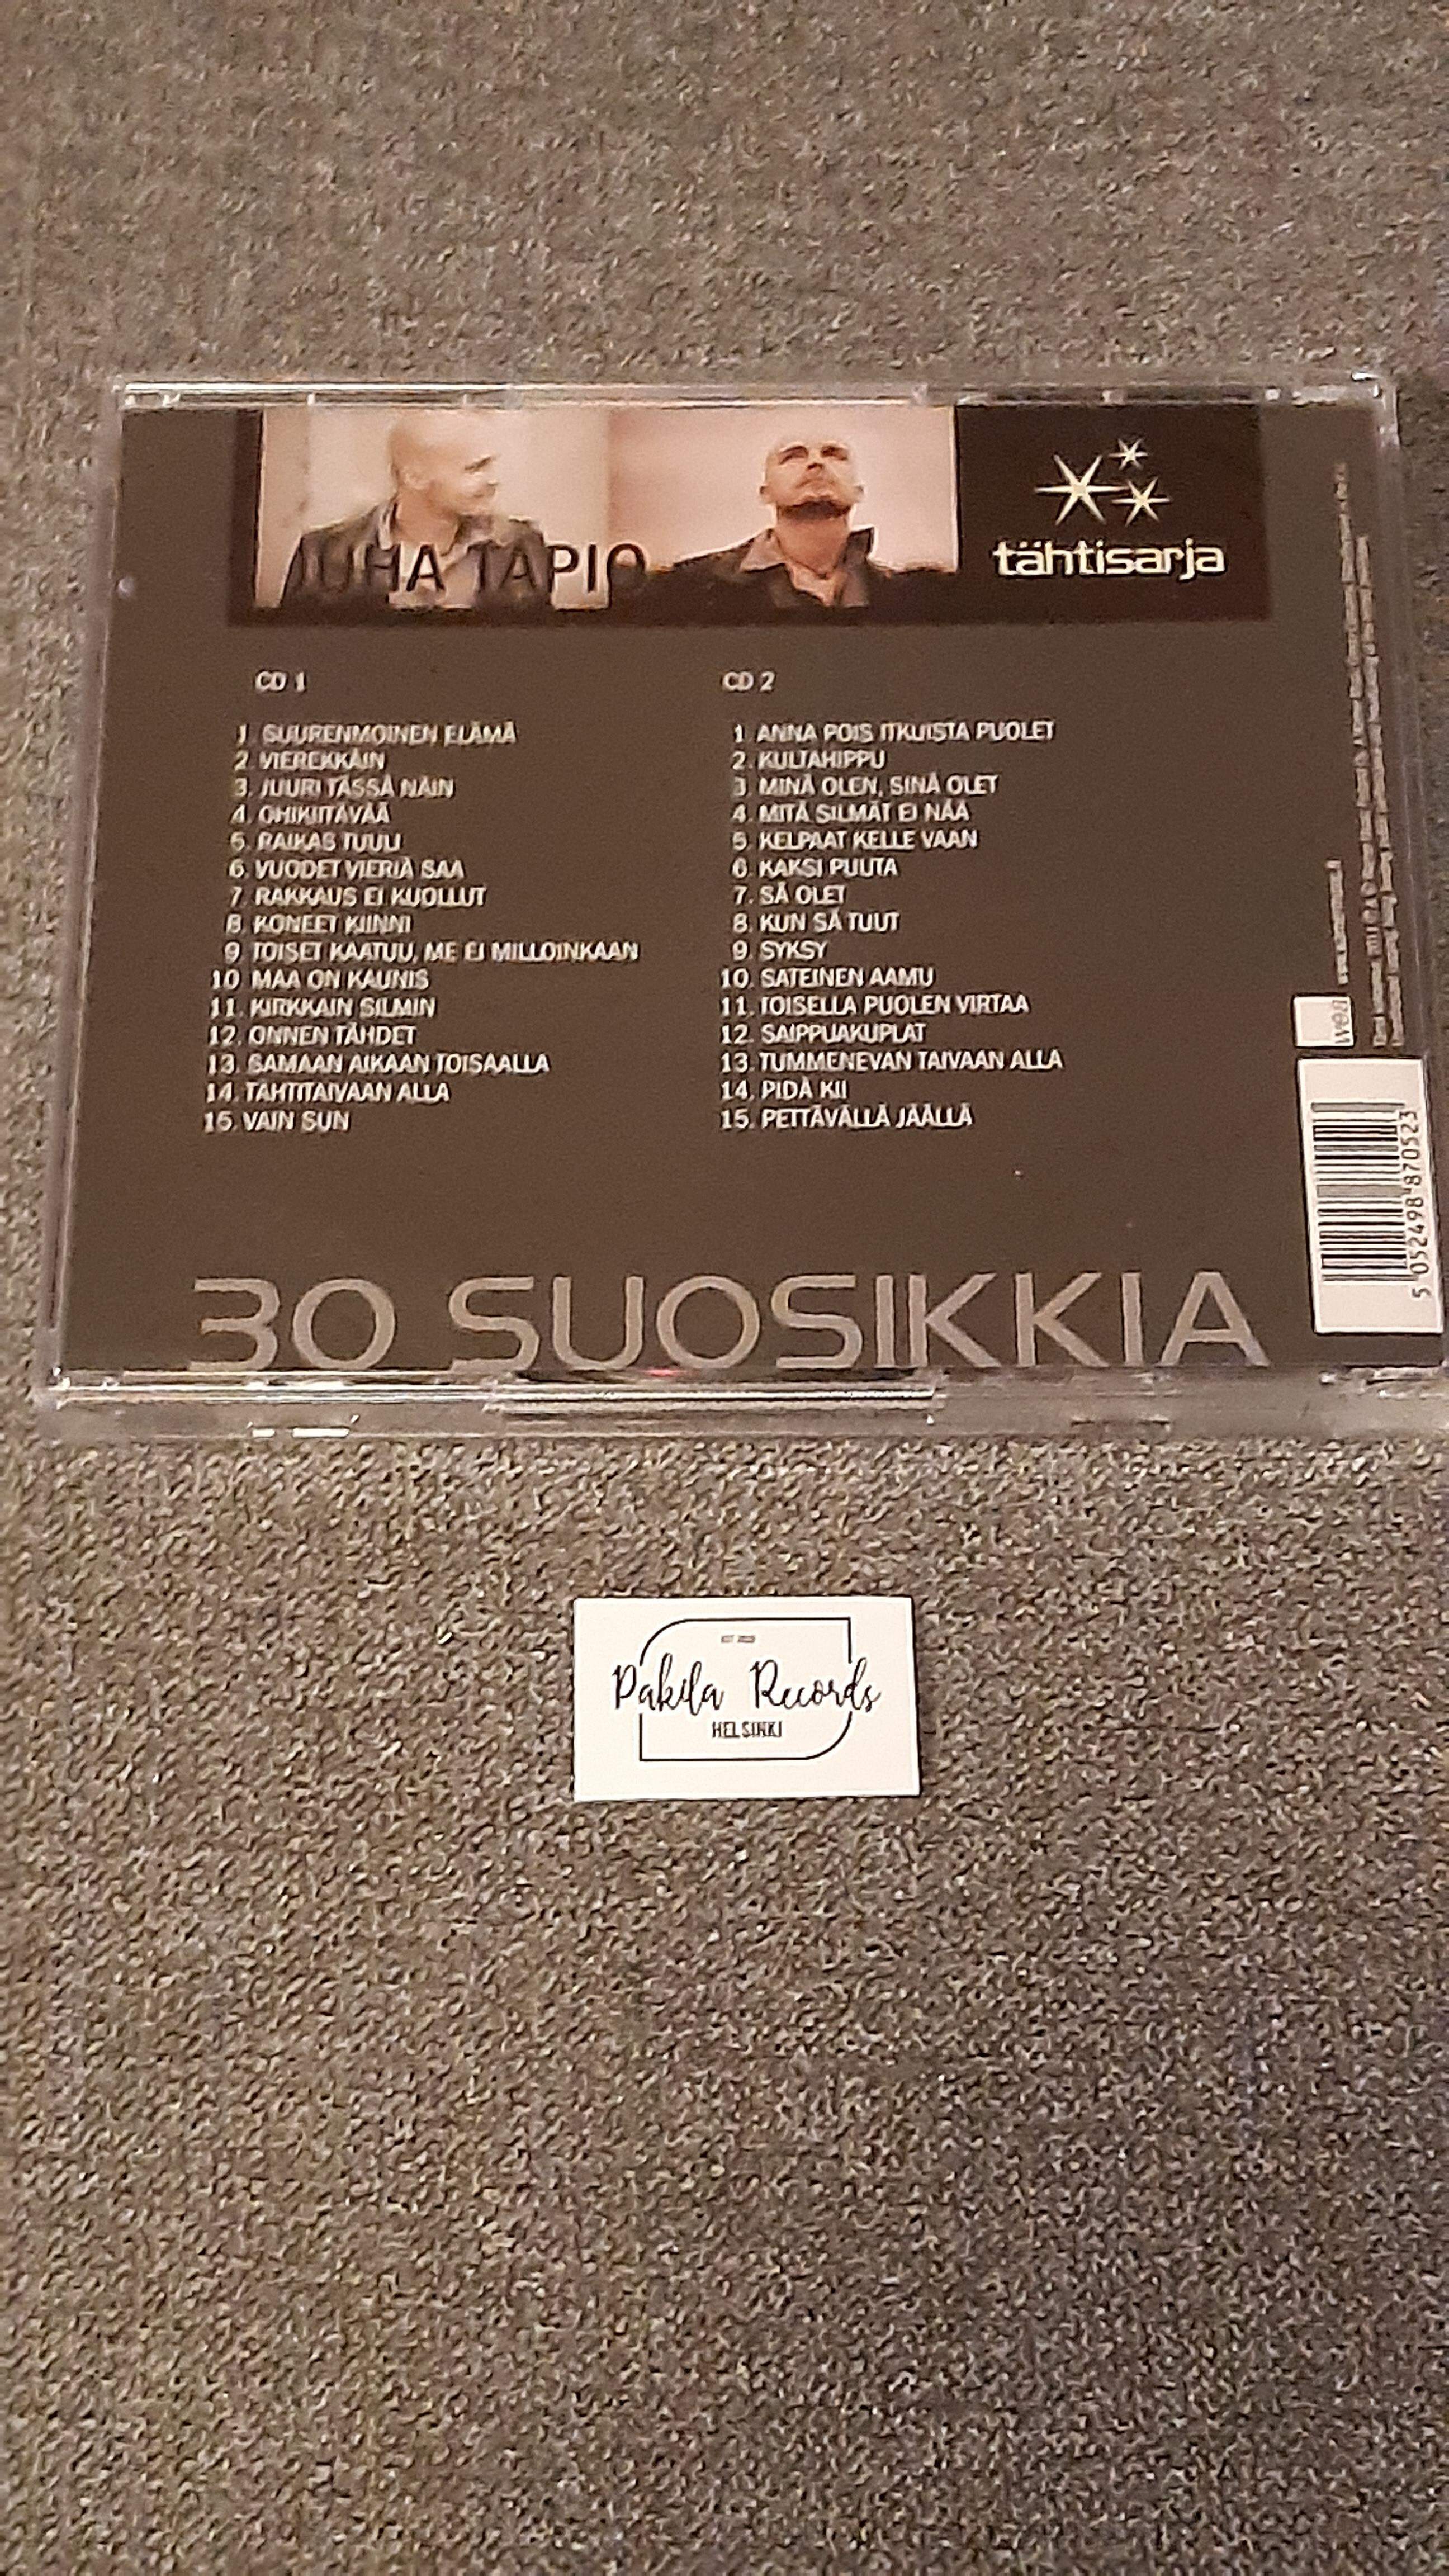 Juha Tapio - 30 Suosikkia - 2 CD (uusi)